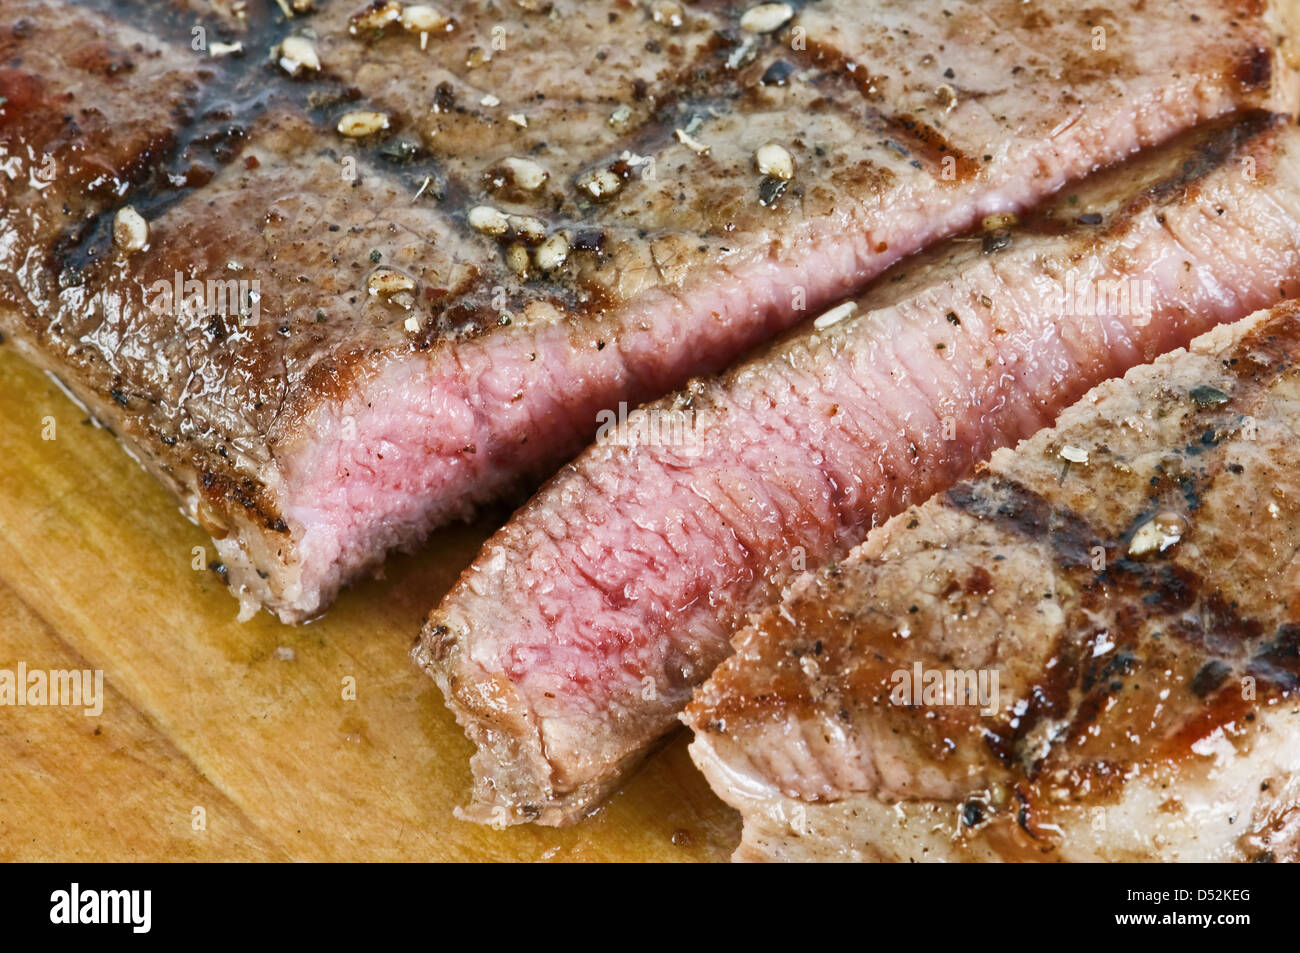 juicy striped steak on wood table Stock Photo